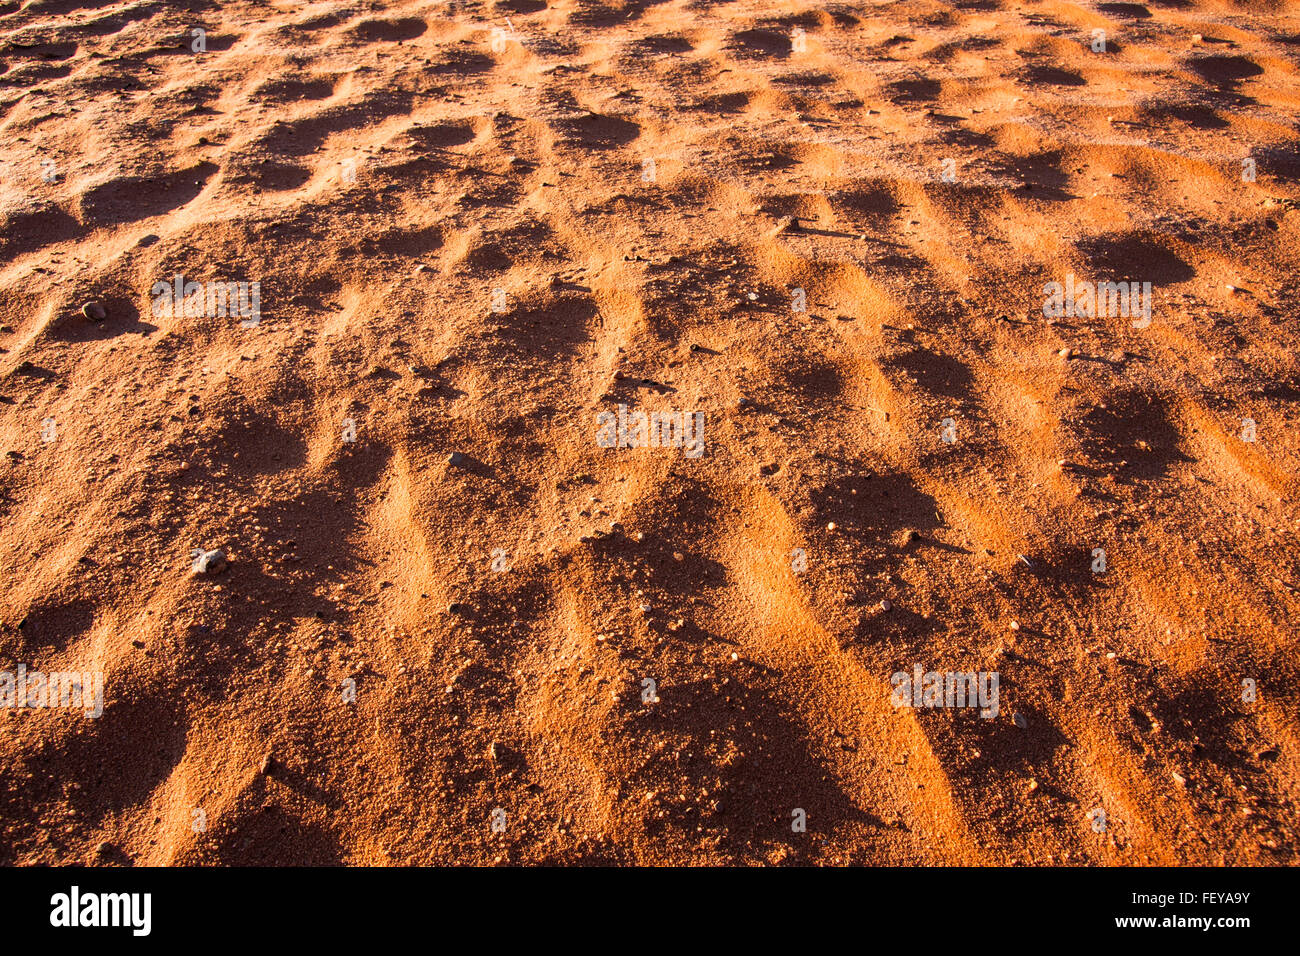 Detail of red sand in Wadi Rum desert reservation, Jordan. Stock Photo